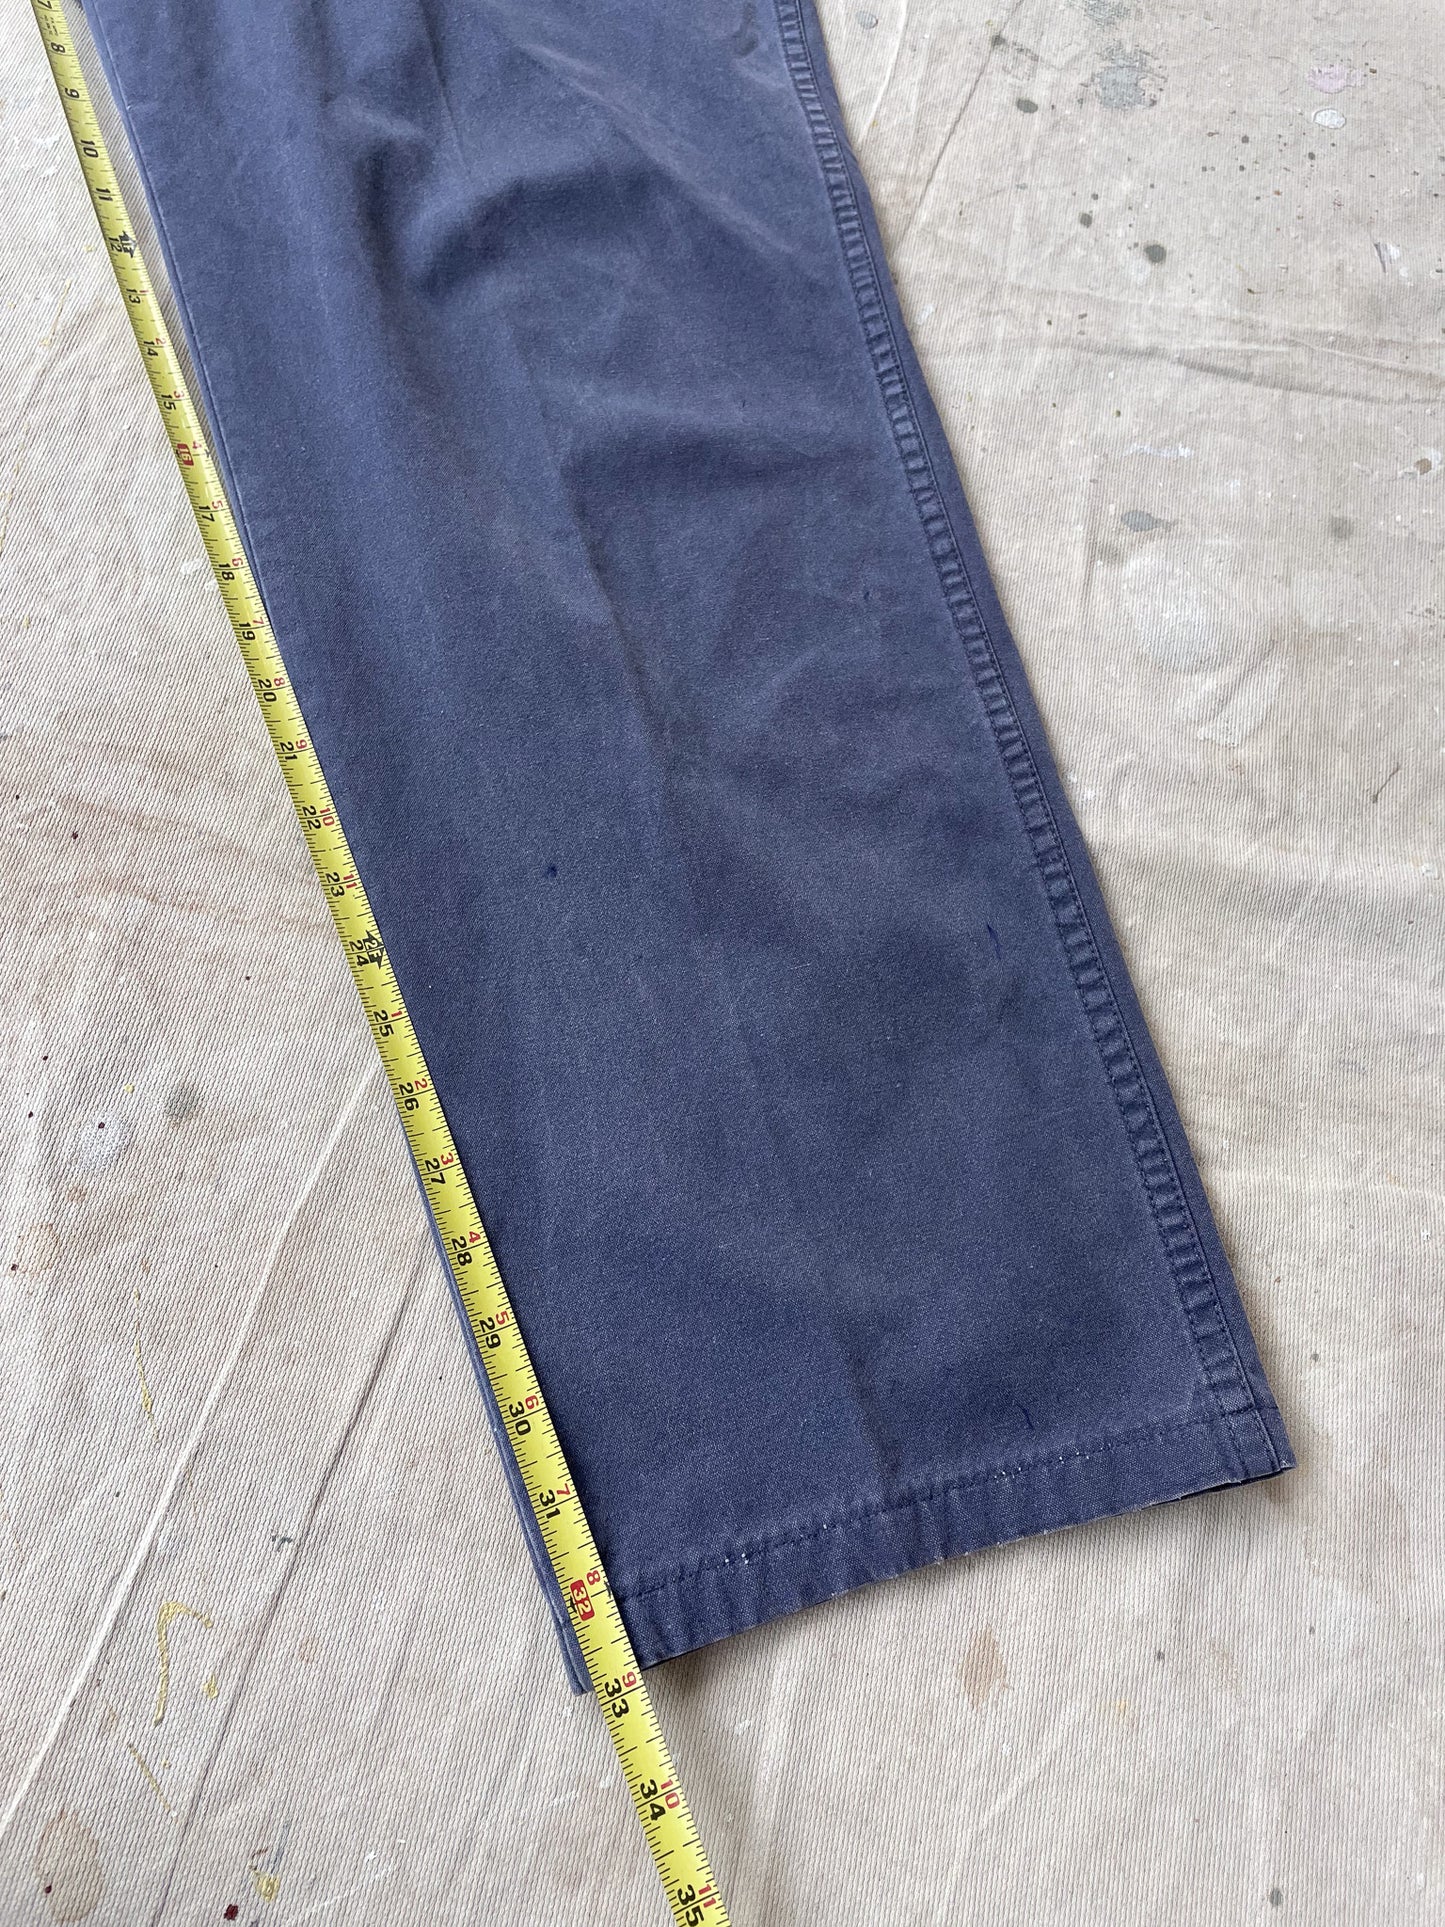 Banana Republic Pleated Pants—[34x33]